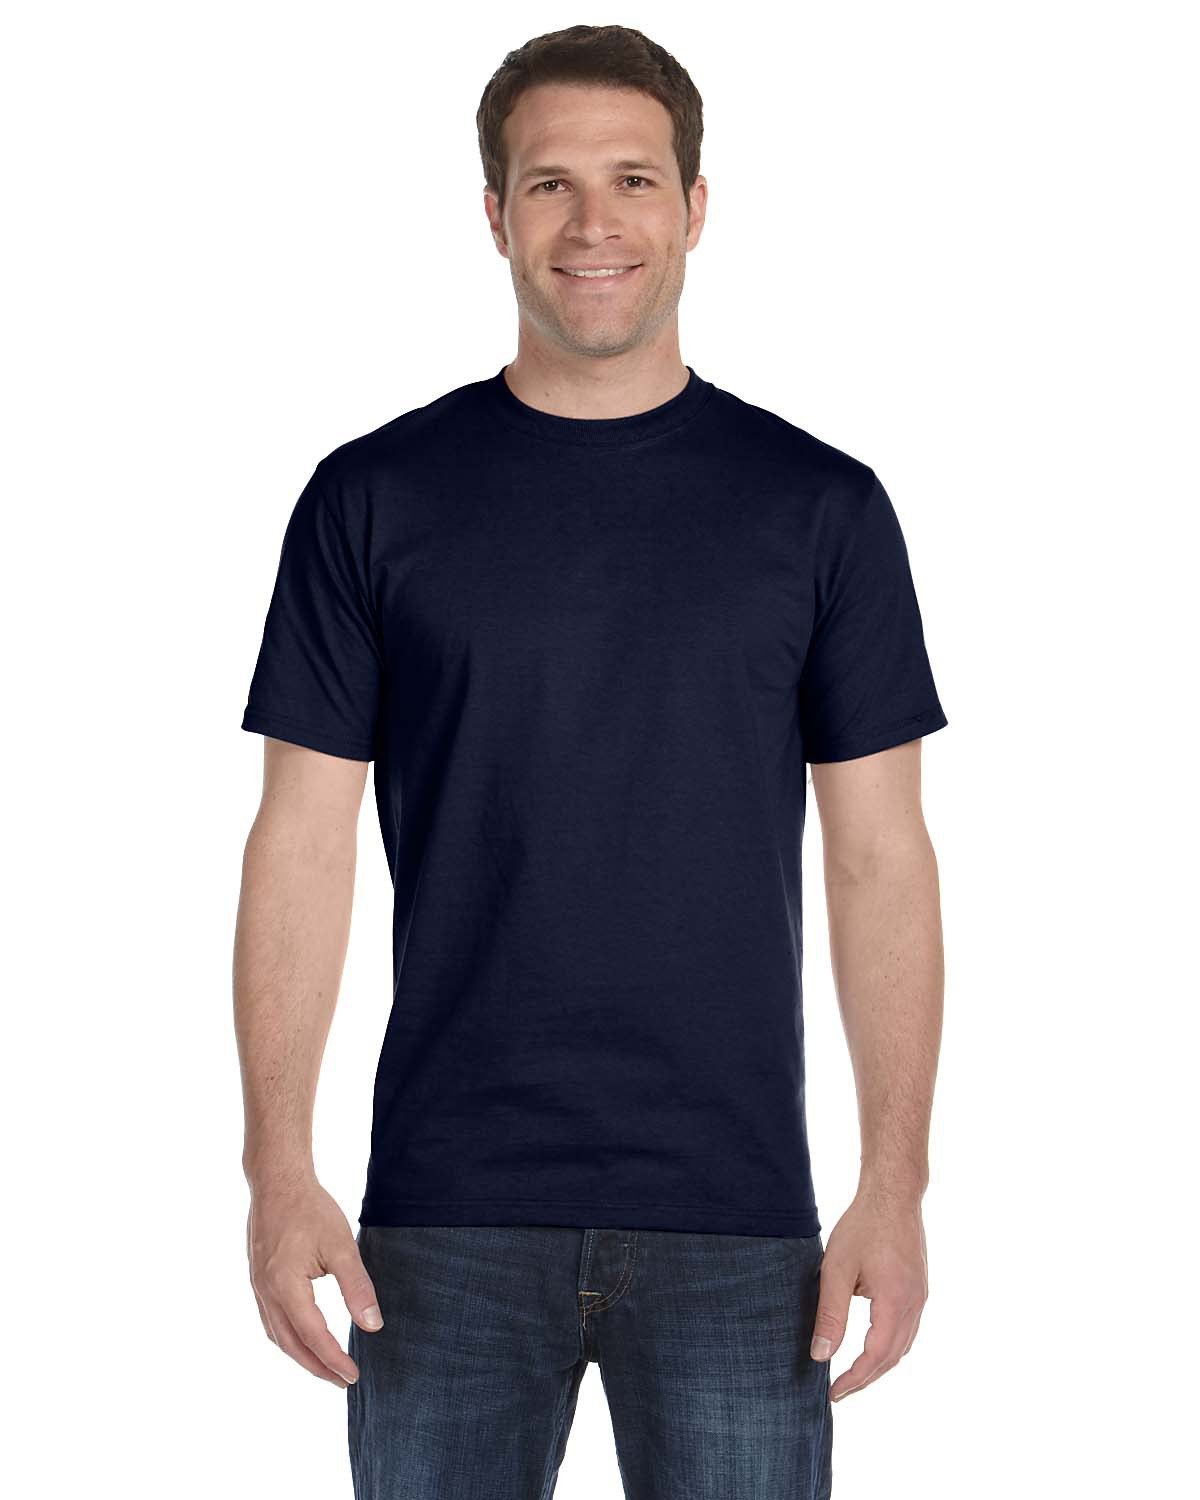 Hanes Unisex 5.2 oz., Comfortsoft® Cotton T-Shirt NAVY 